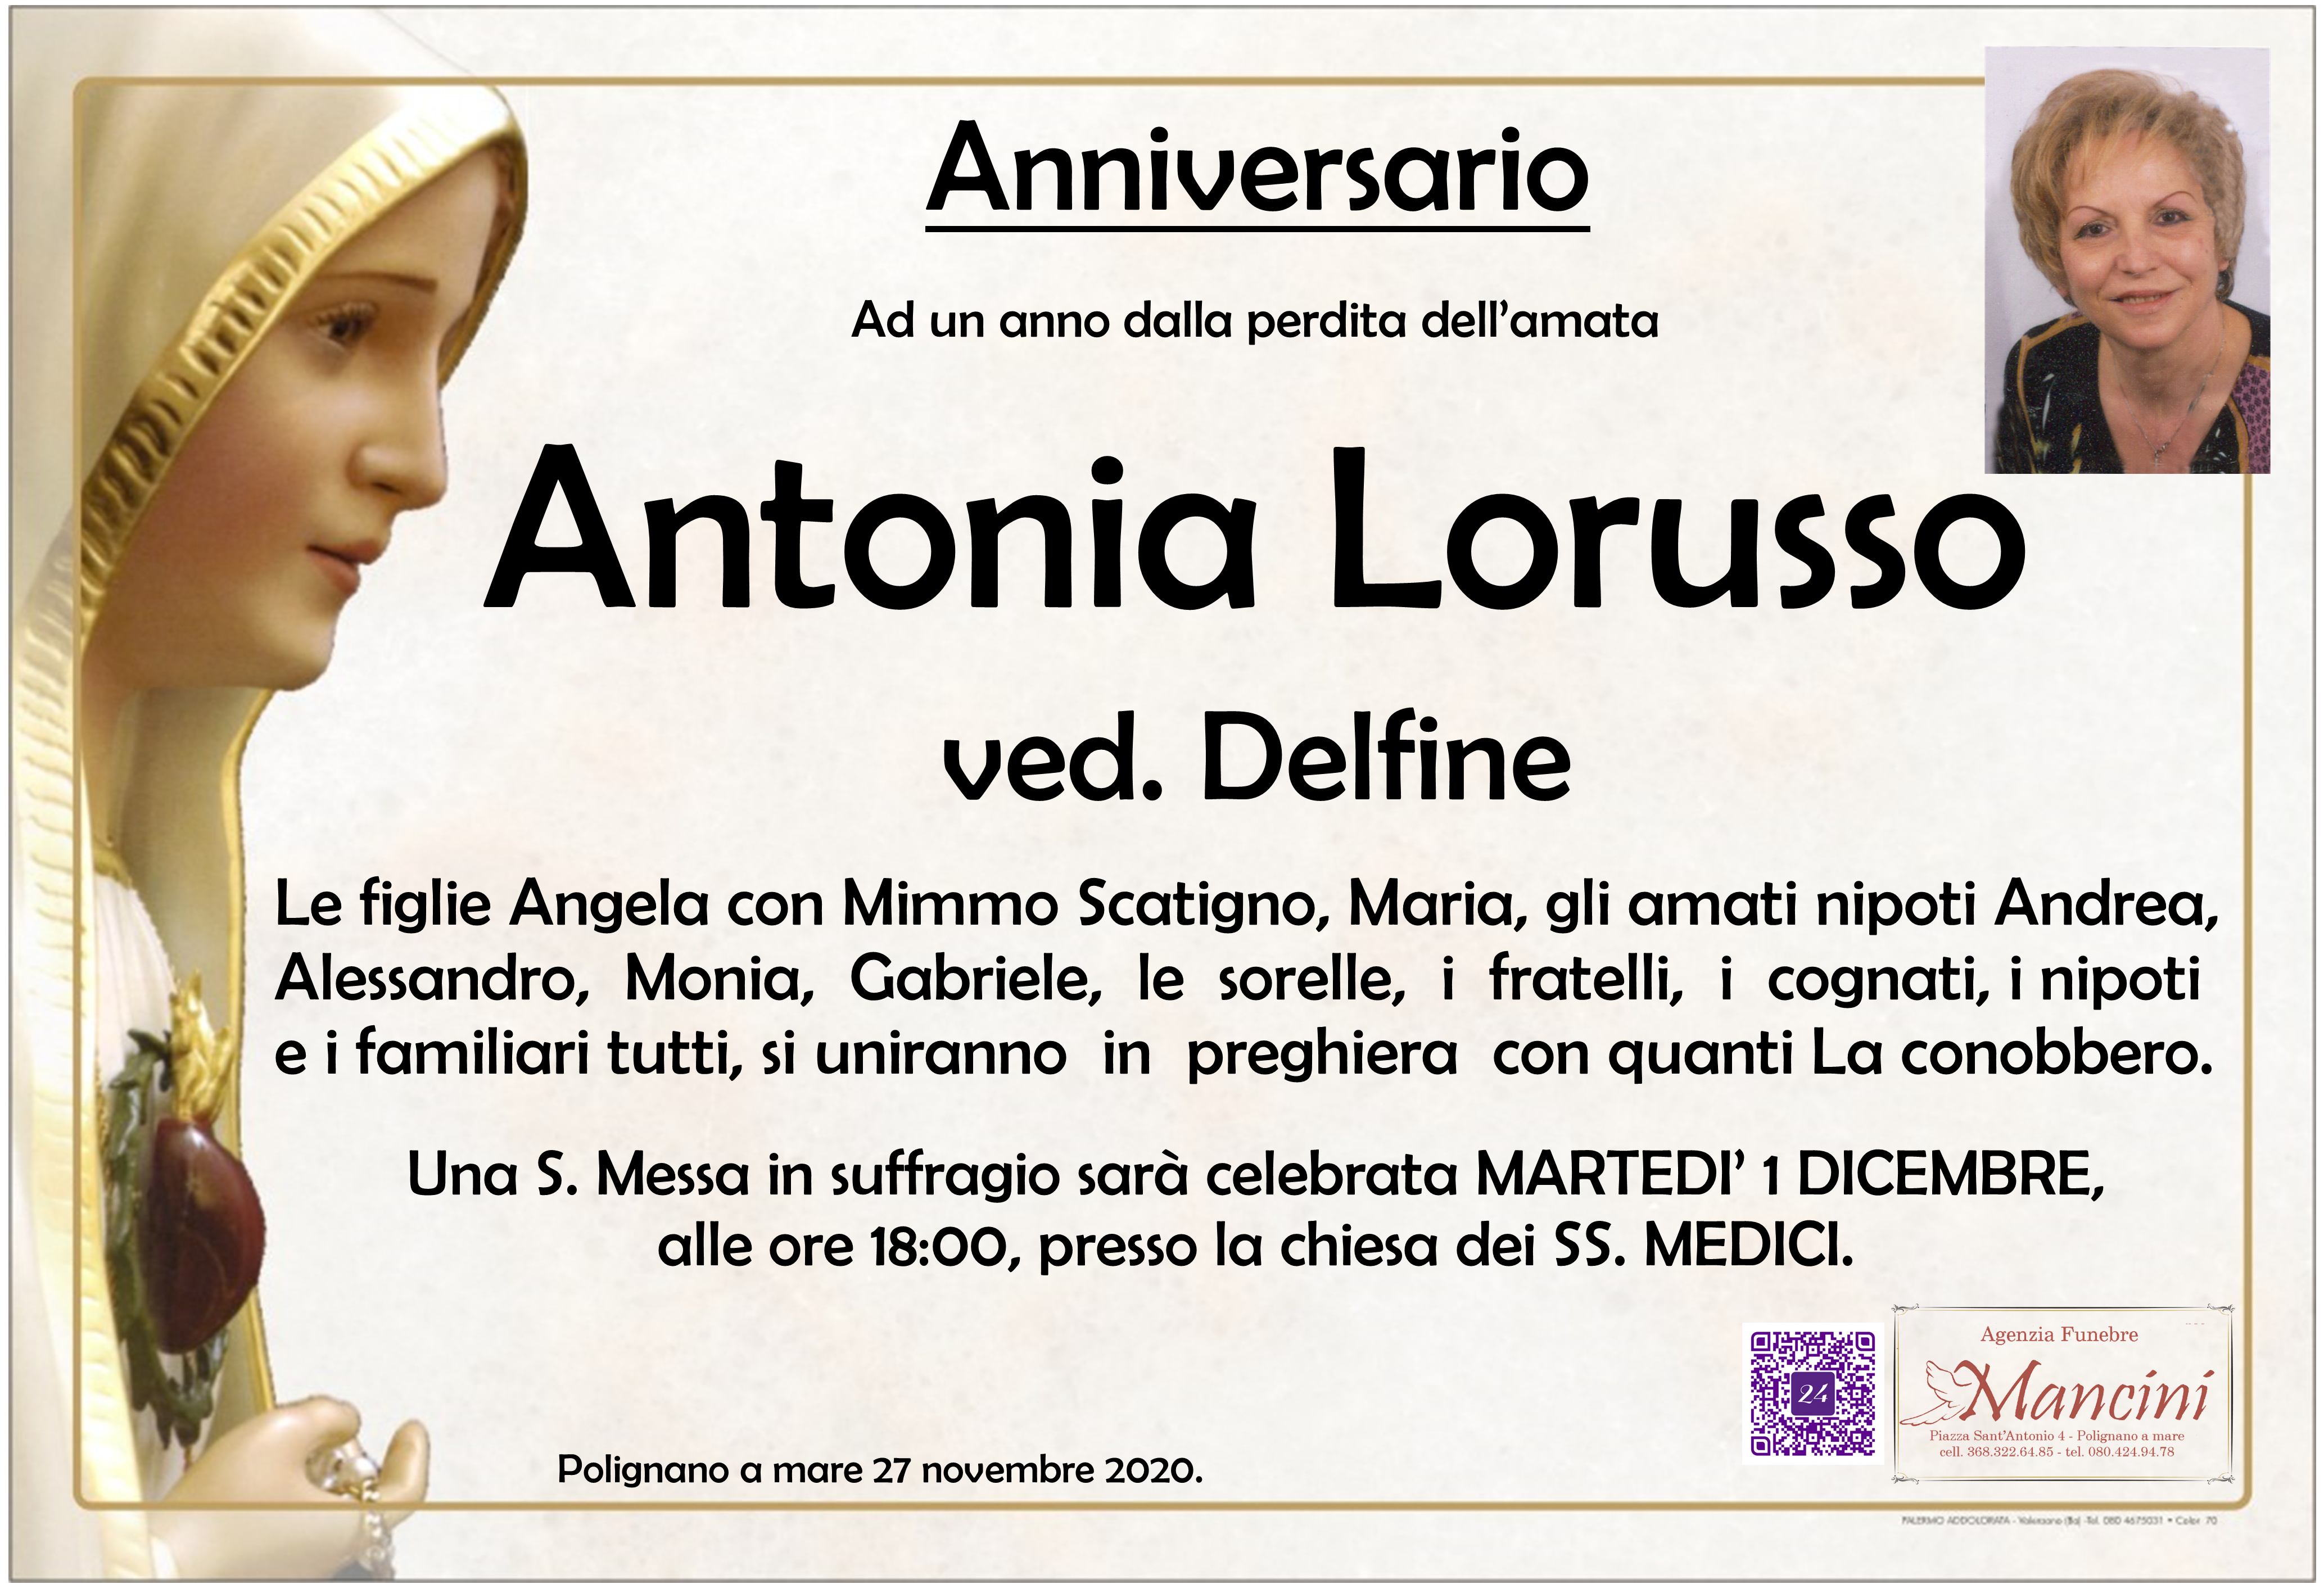 Antonia Lorusso